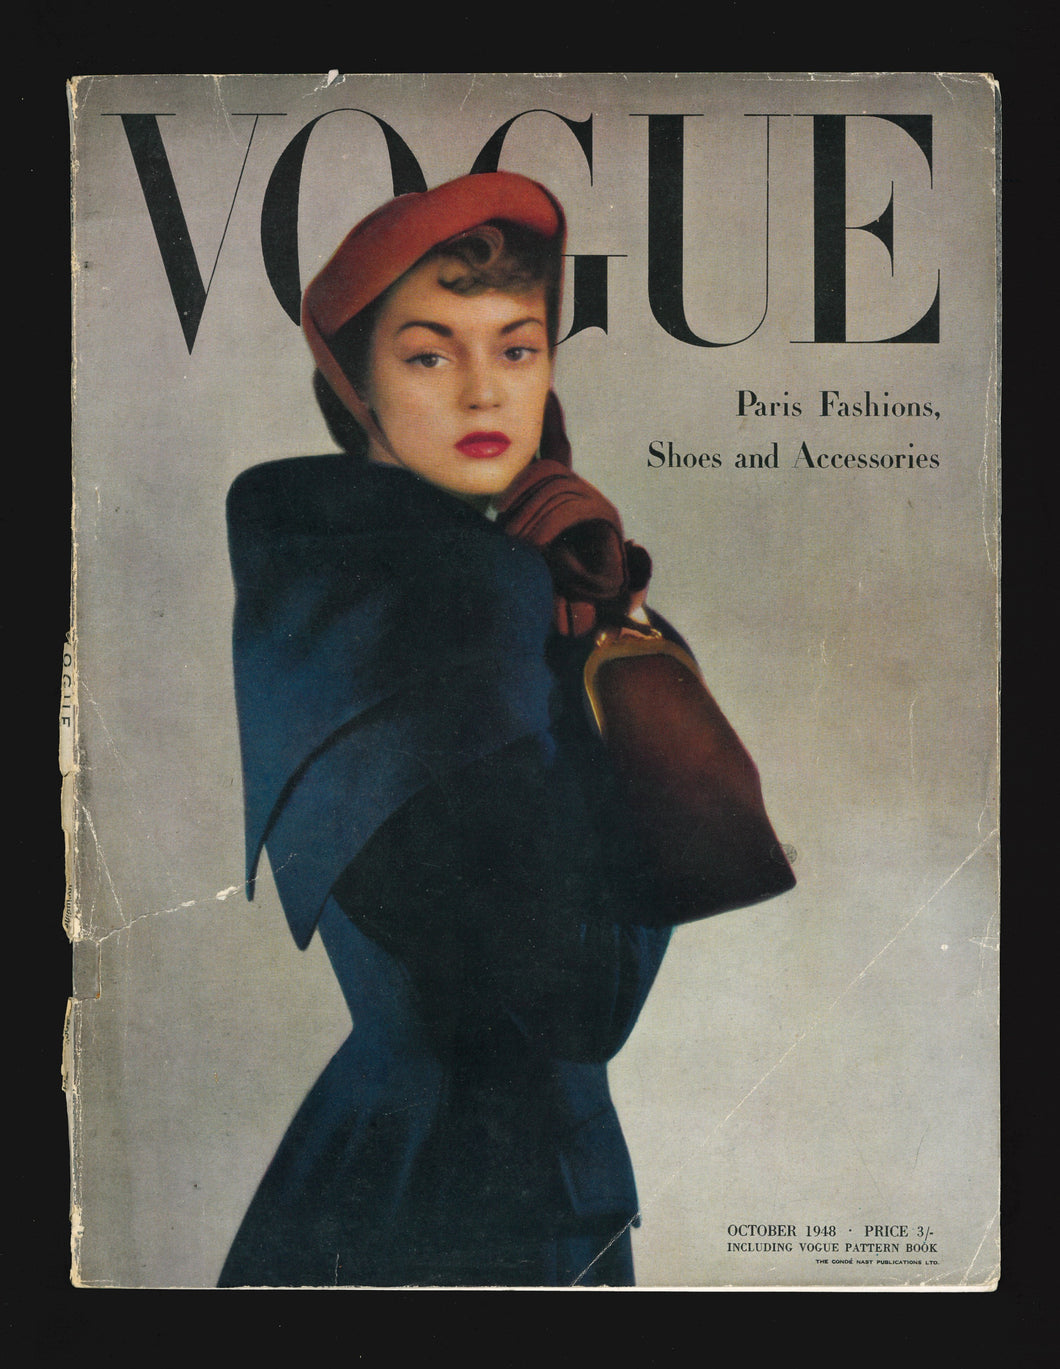 Vogue UK Oct 1948